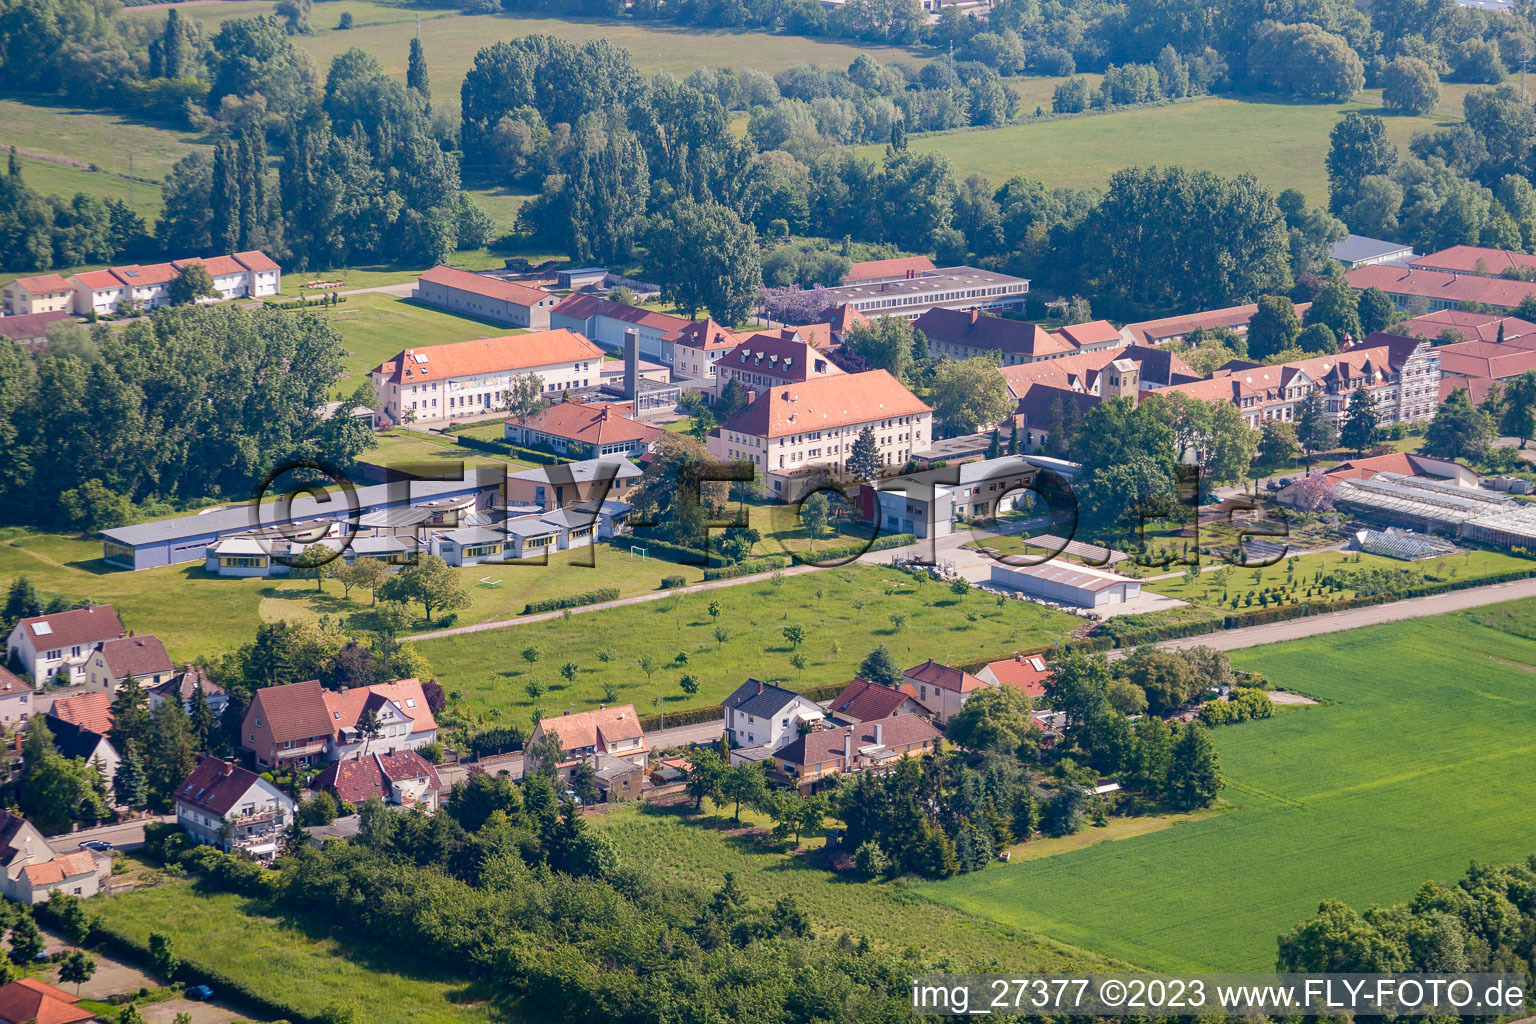 Drone recording of Landau in der Pfalz in the state Rhineland-Palatinate, Germany